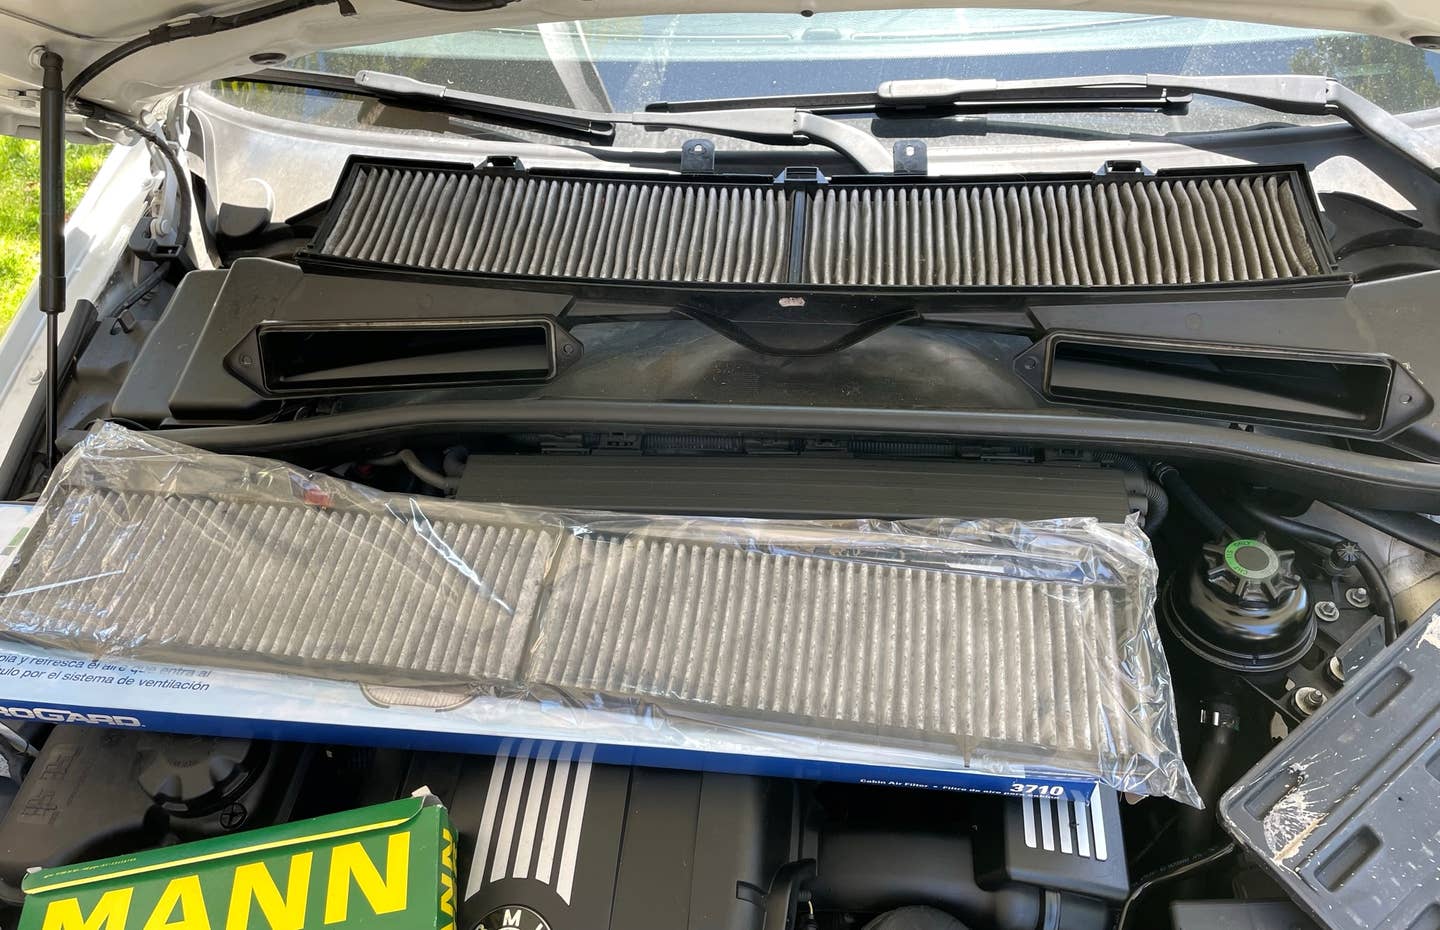 A BMW N52 engine's cabin filter